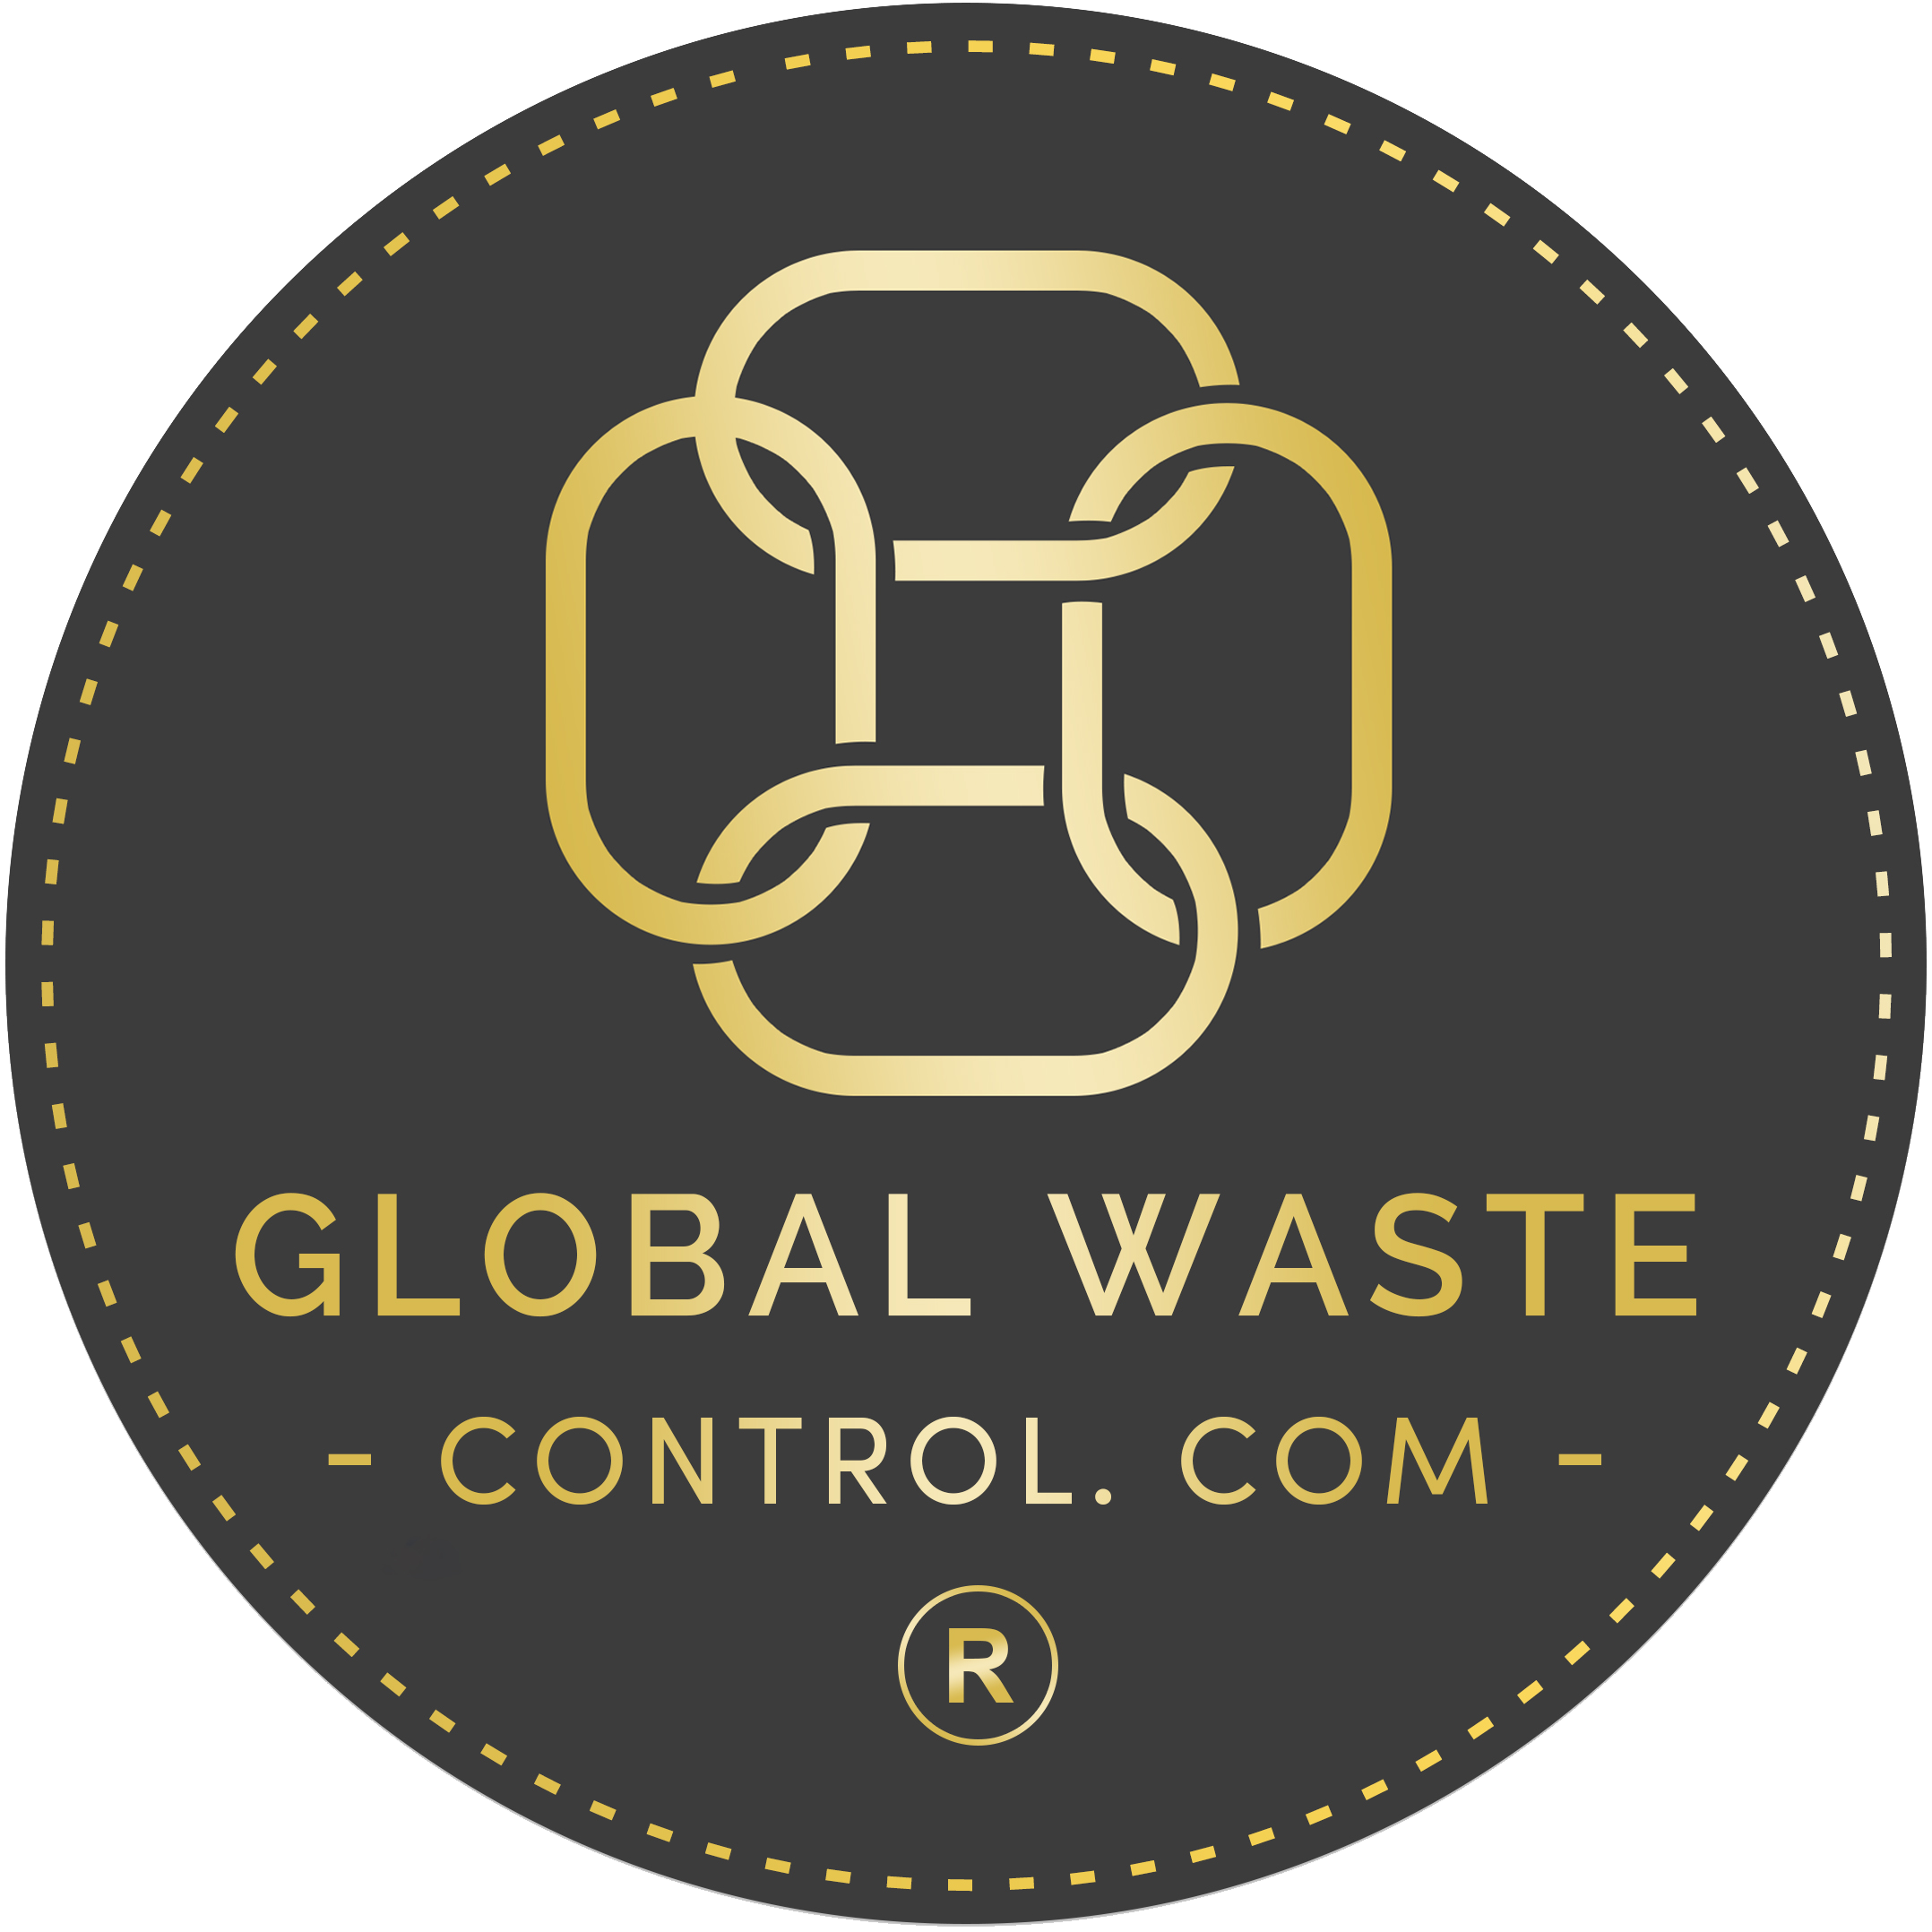  Global Waste Control